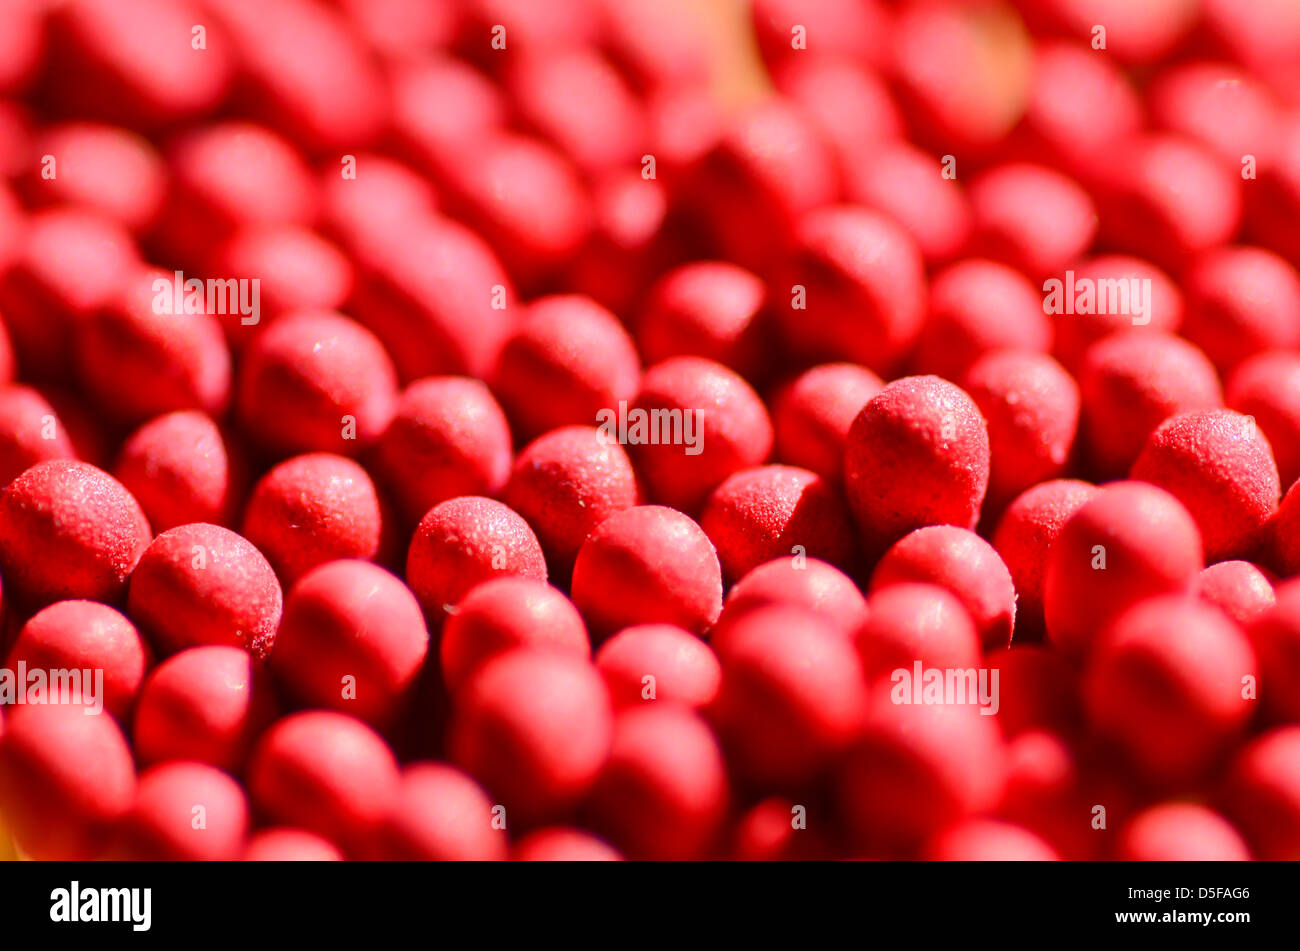 Closeup of red match heads Stock Photo